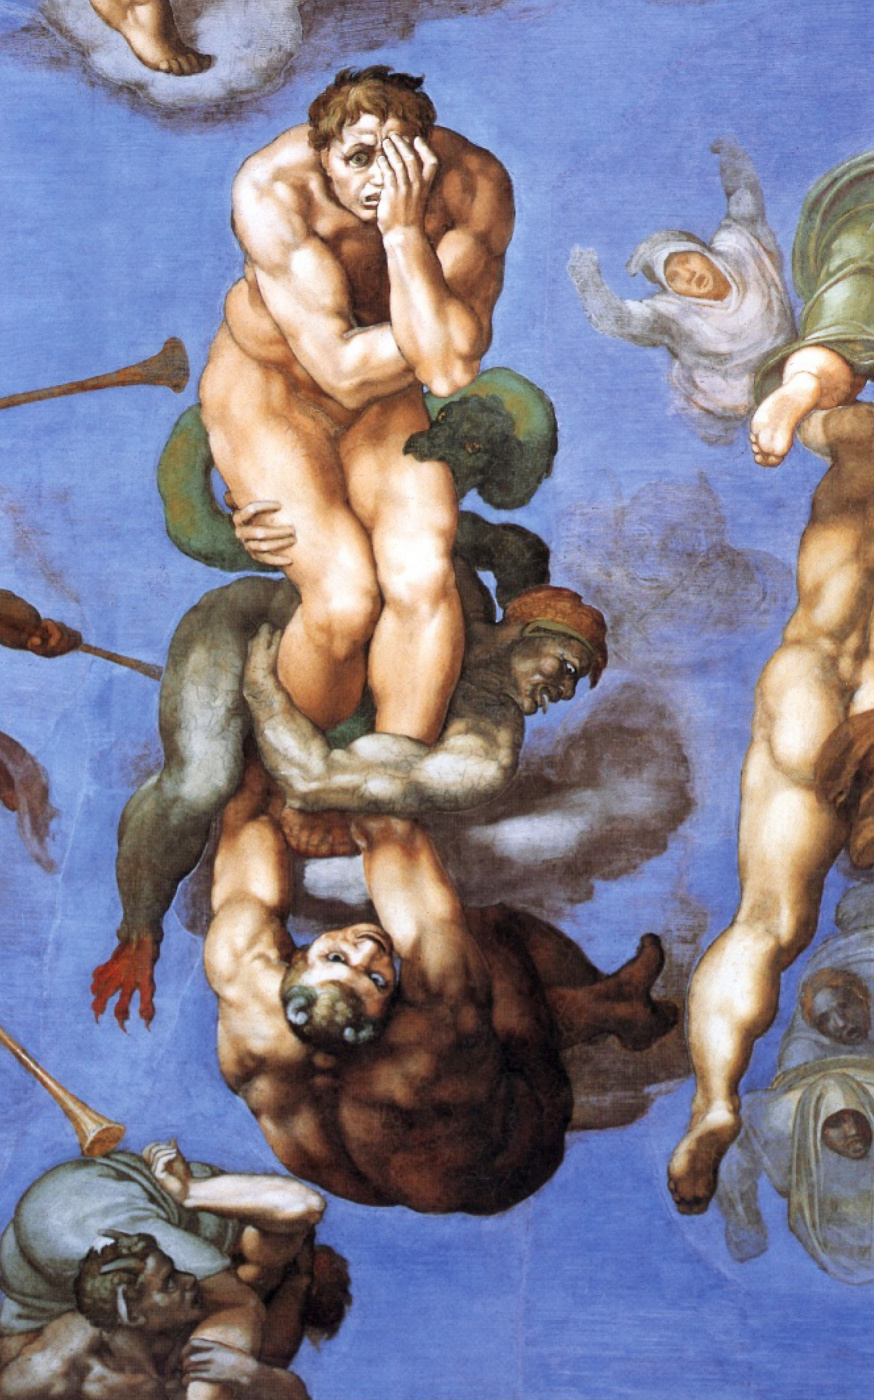 Michelangelo Buonarroti. Last judgment, detail: the Damned in the underworld